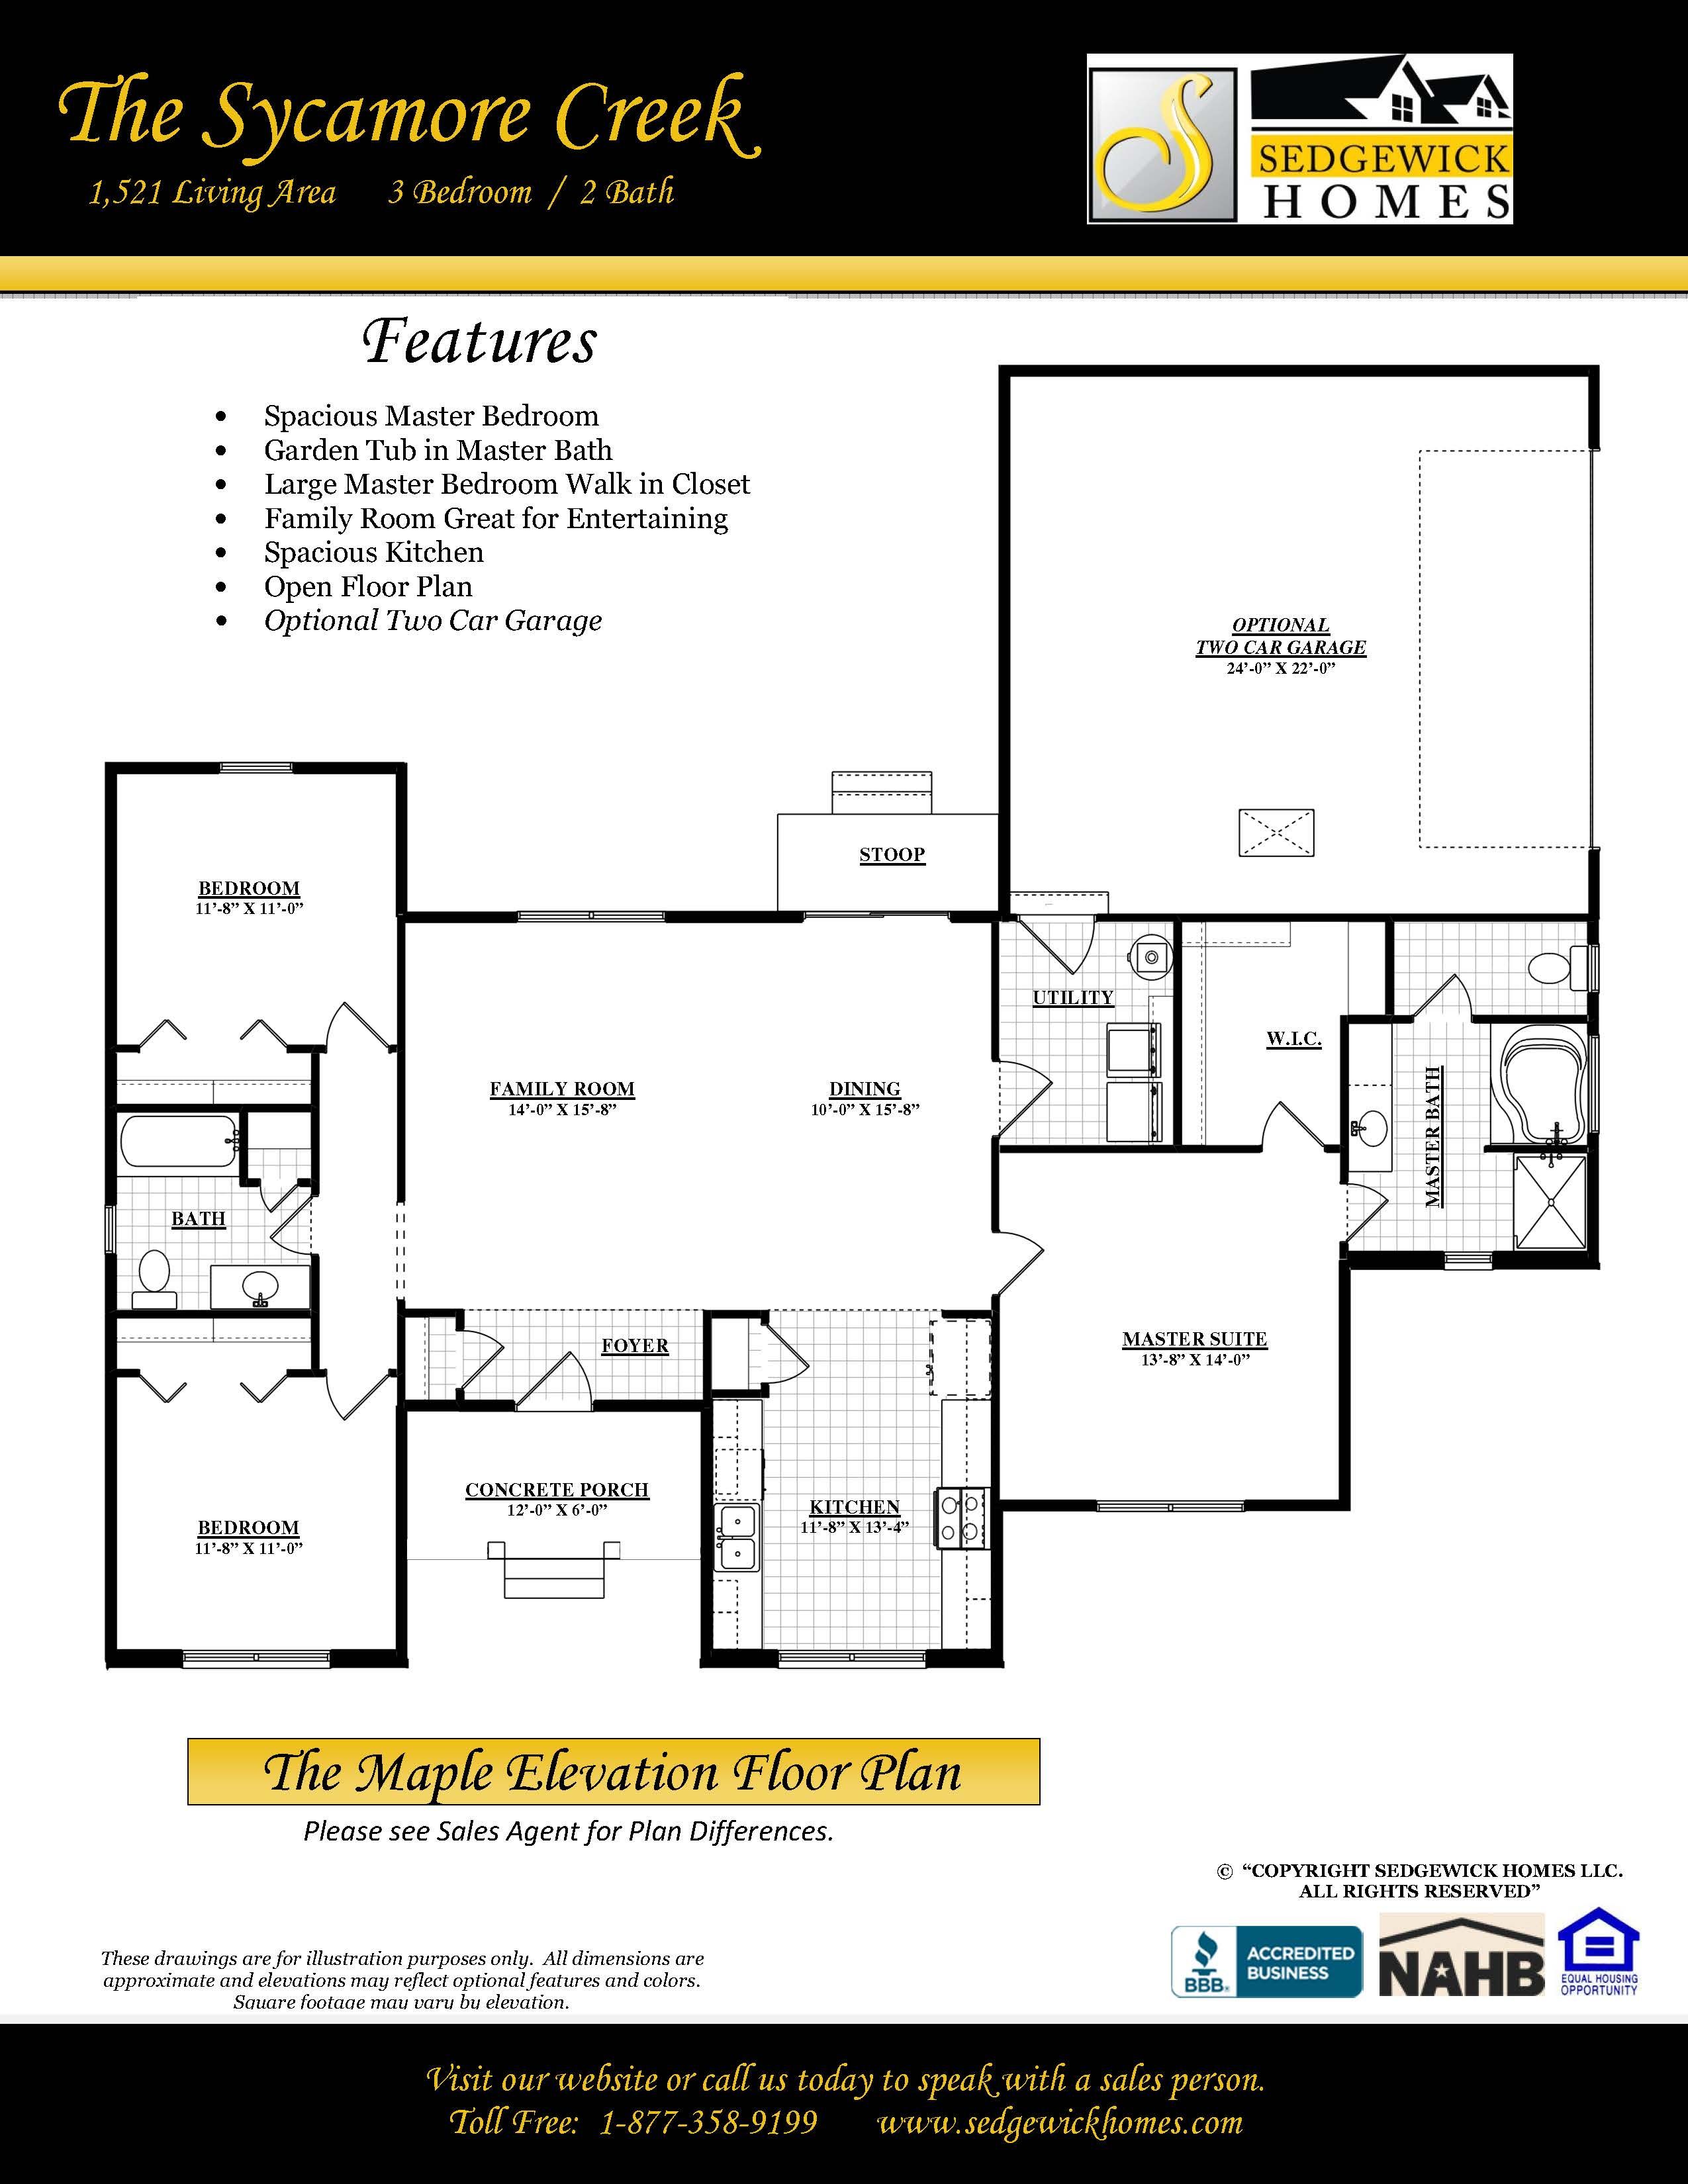 The Sycamore Creek Sedgewick Homes LLC Open floor plan